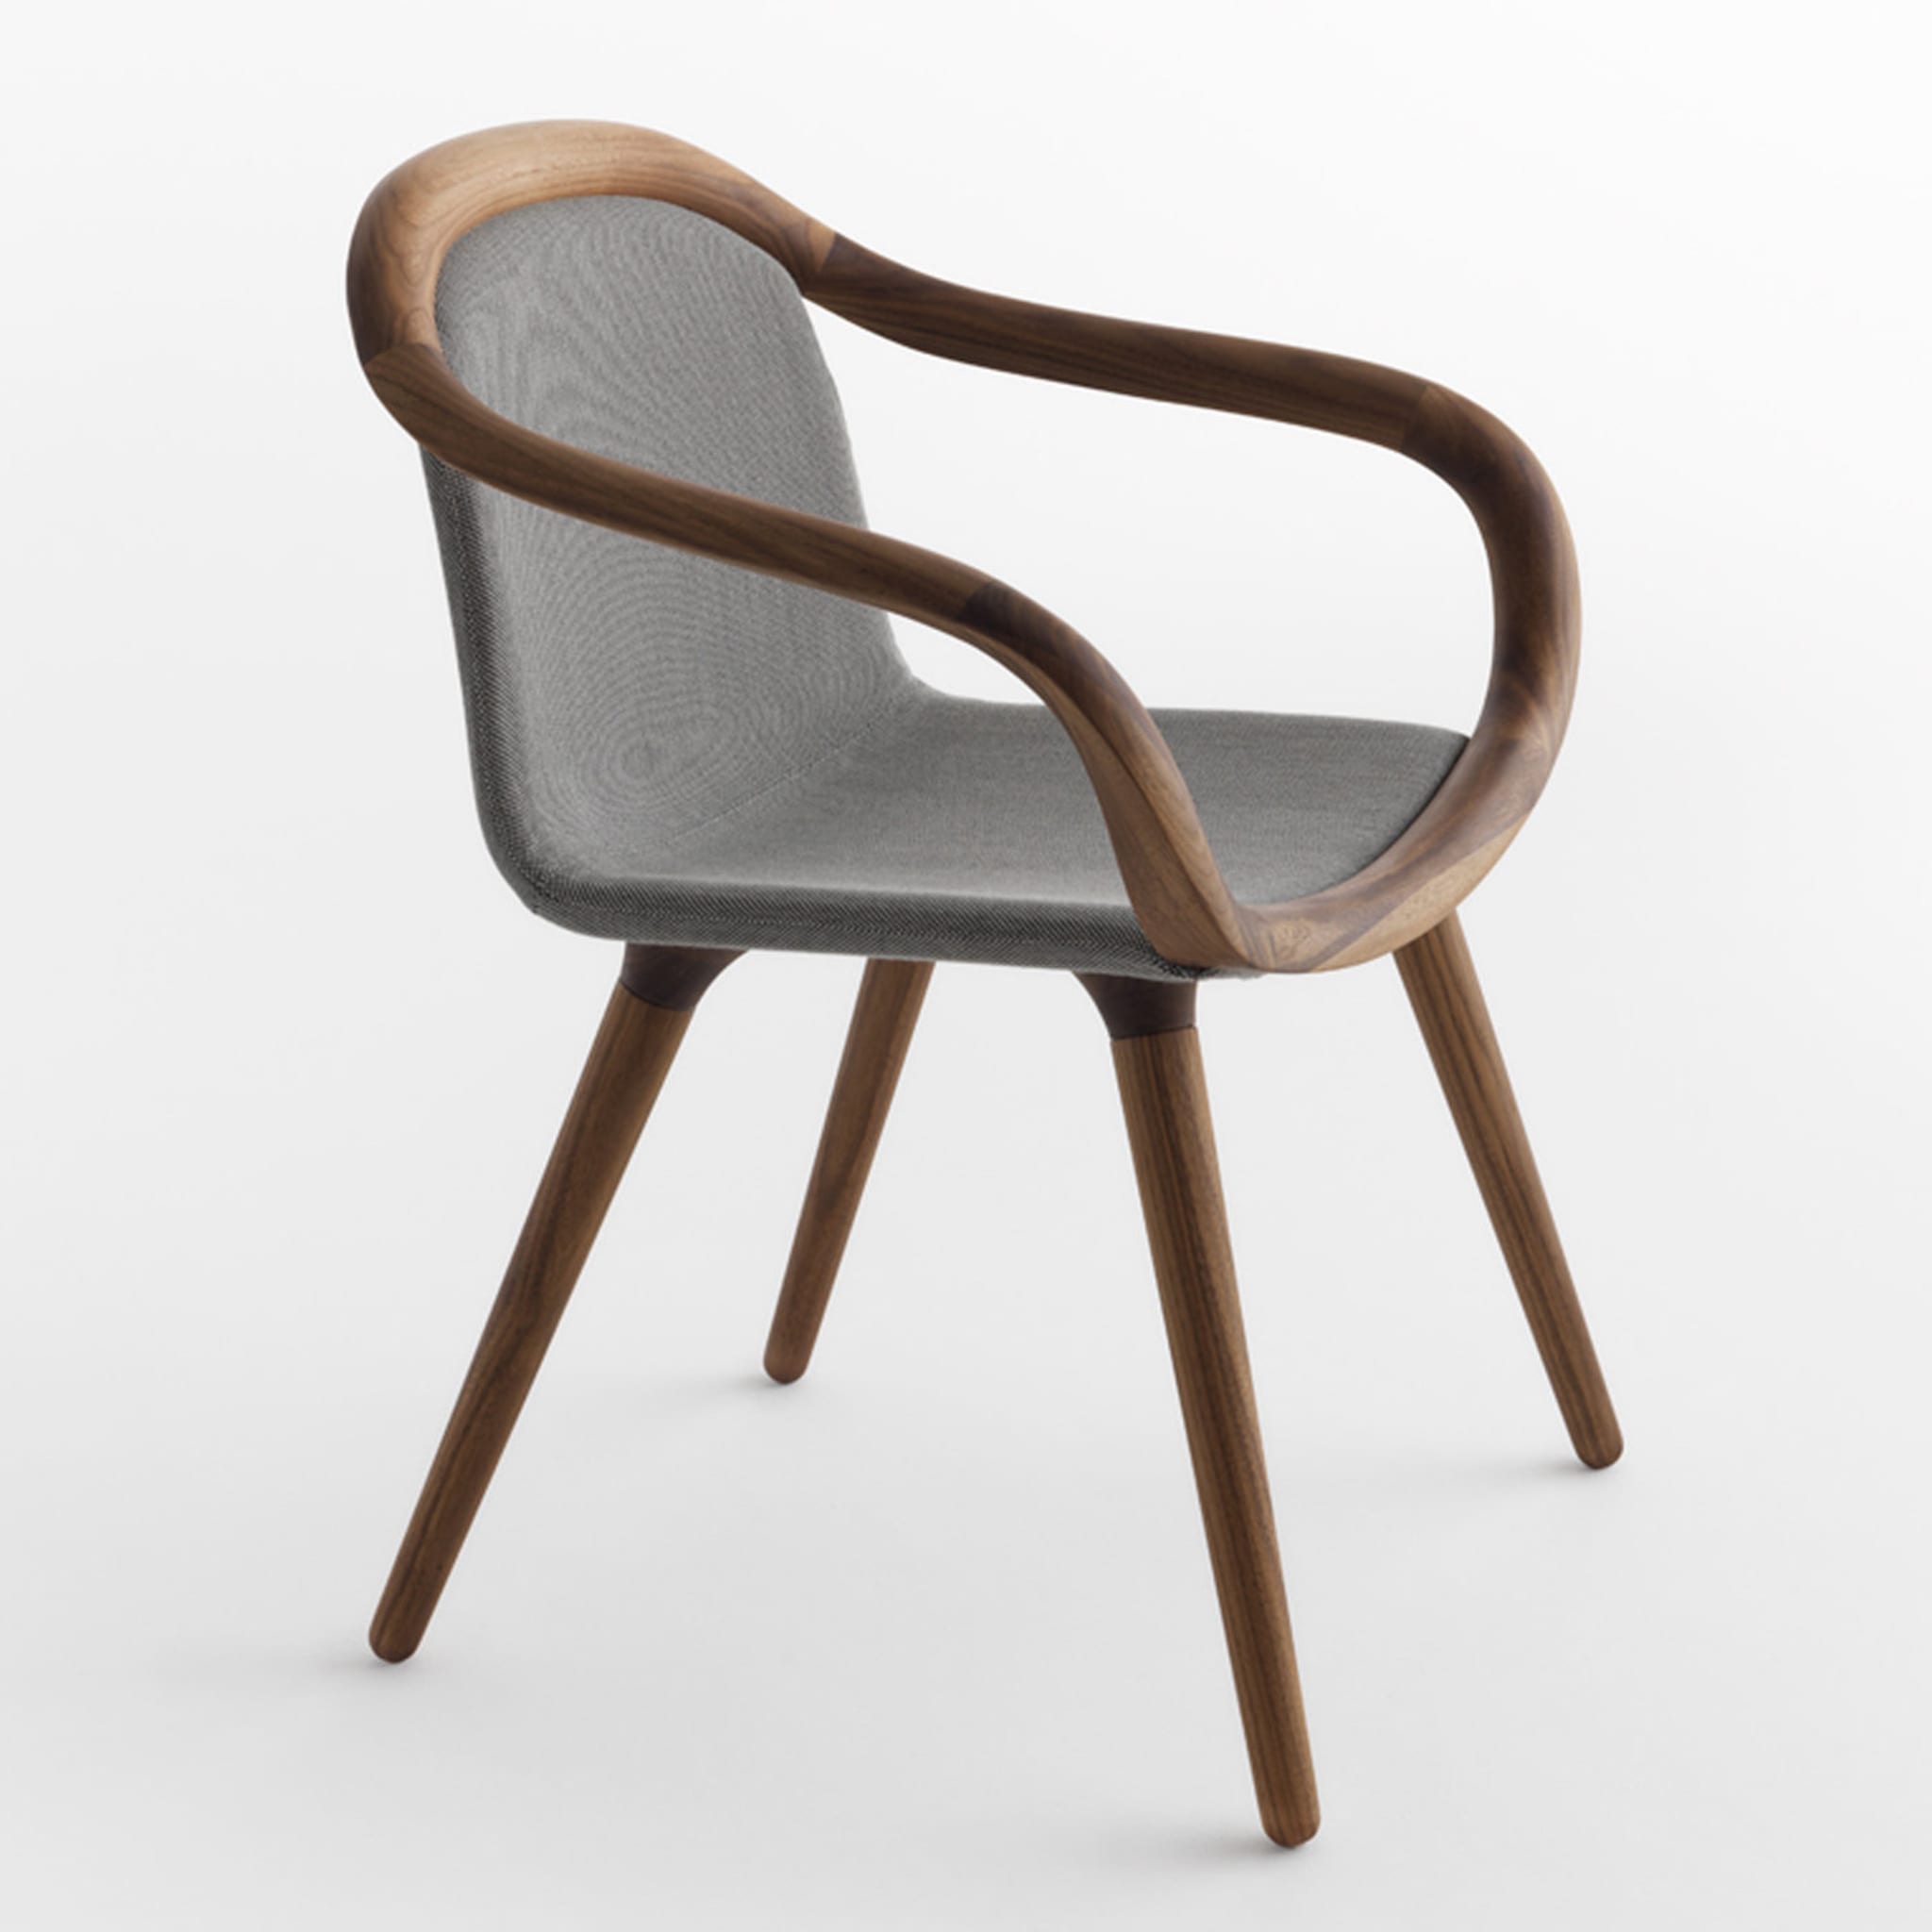 Ginevra Chair by Studio Balutto - Alternative view 1